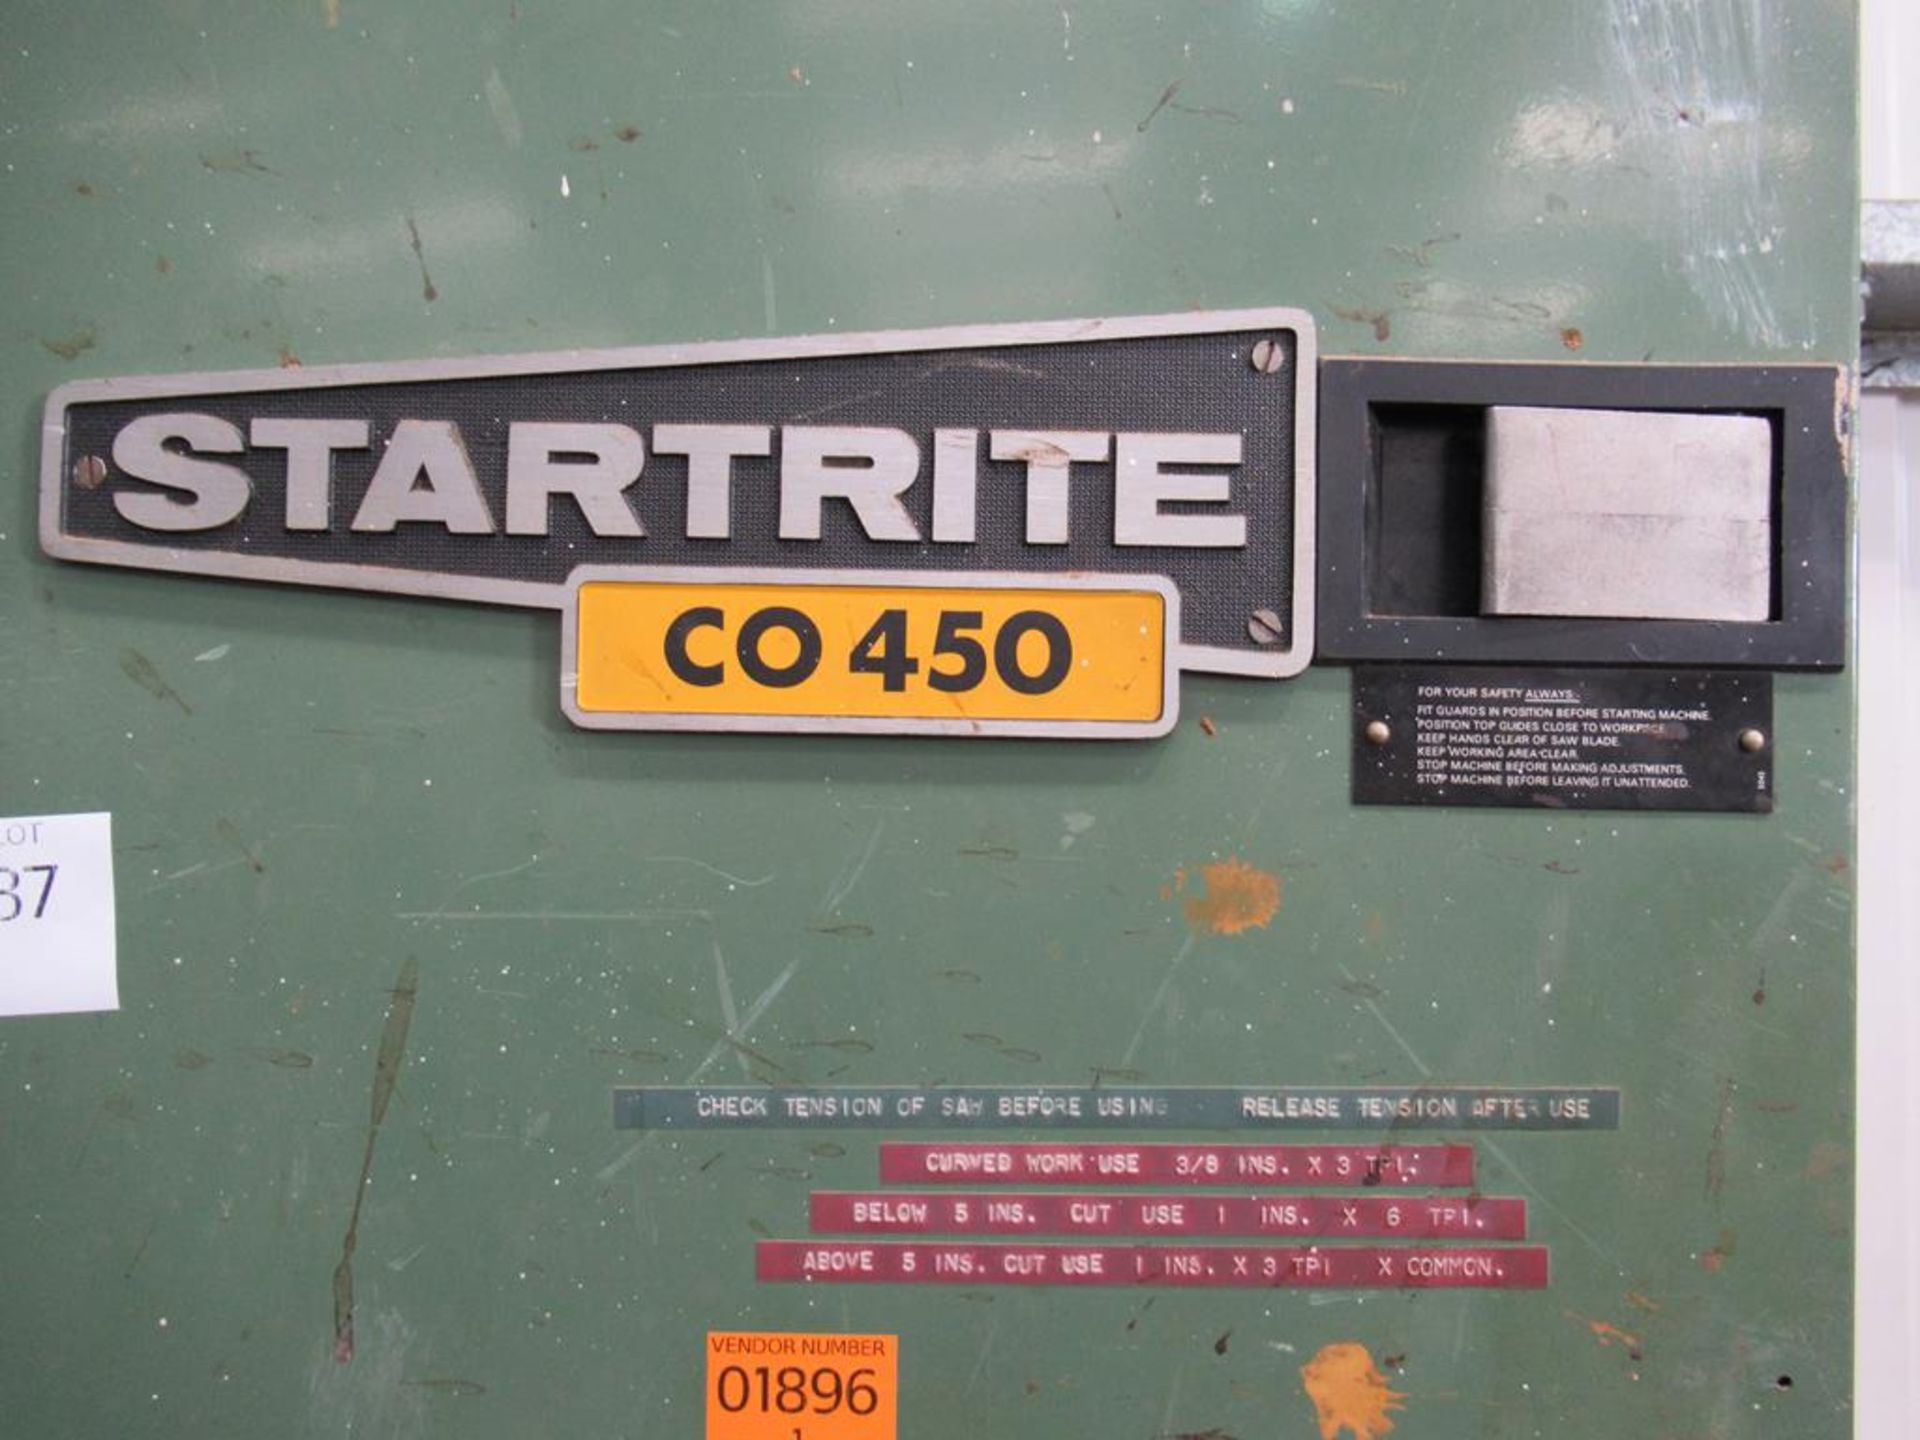 Startrite CO450 Band Saw, 440V, 3-Phase - Image 10 of 13